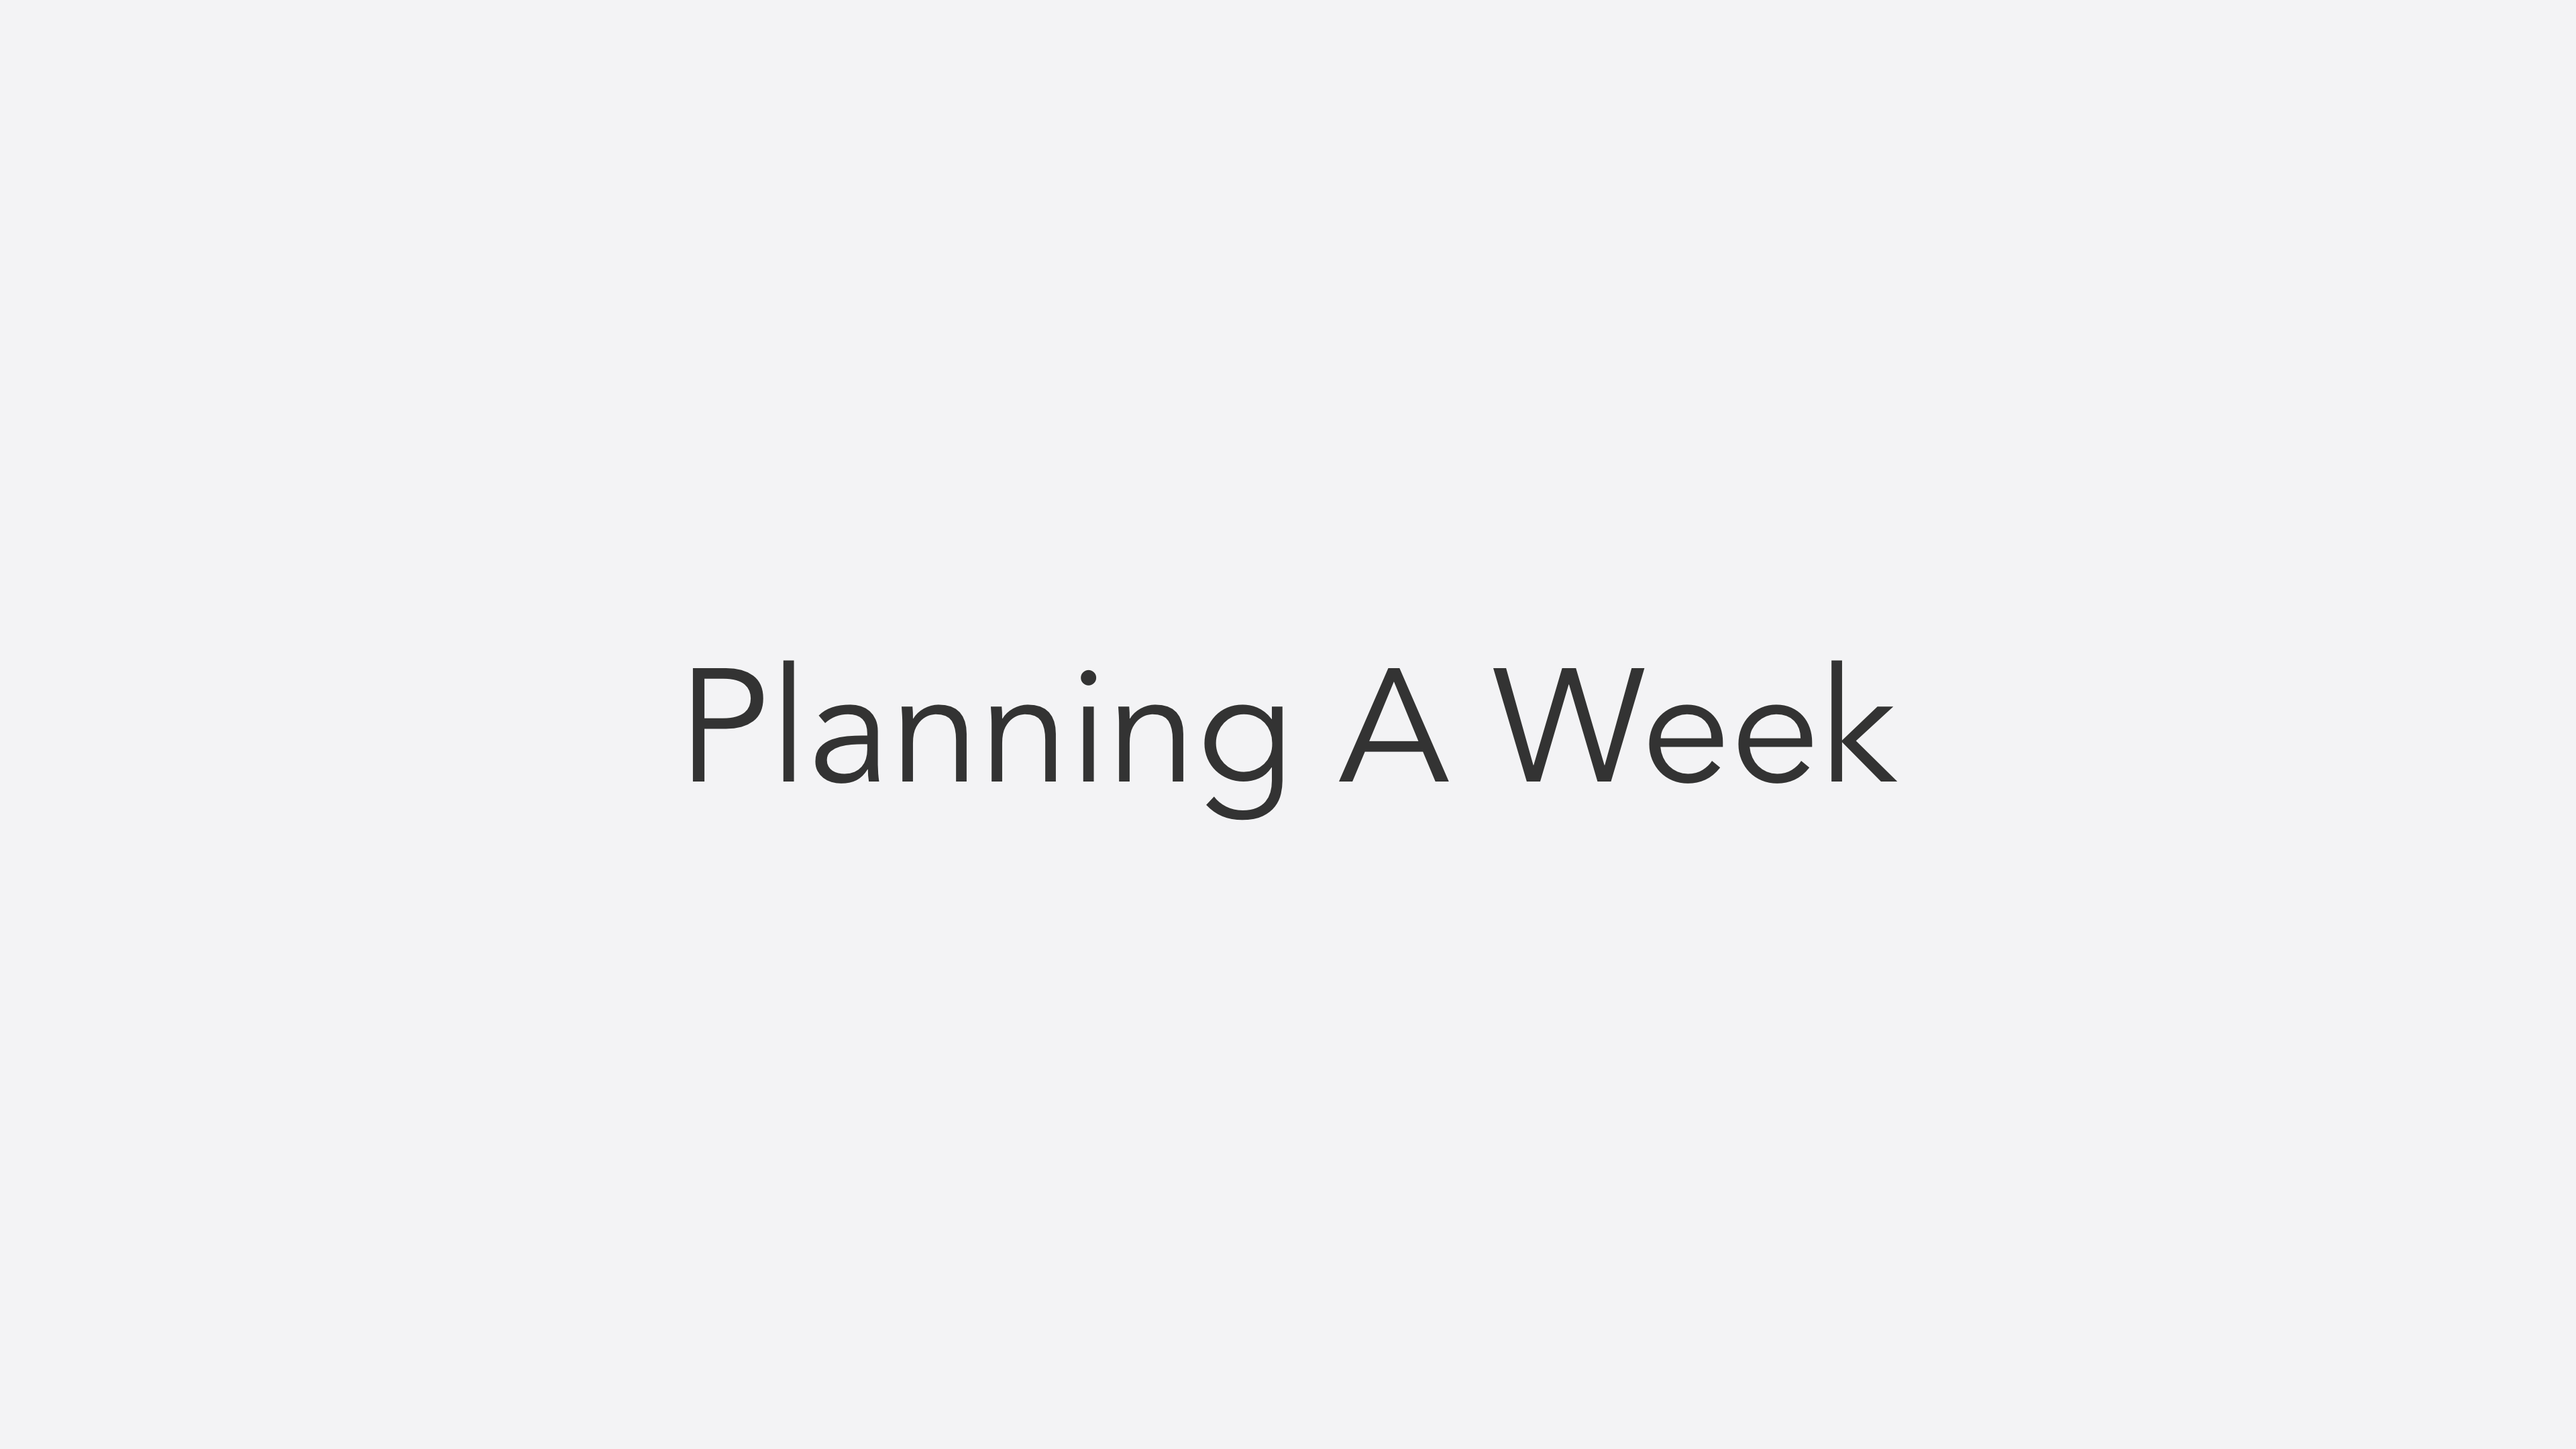 Planning a Week